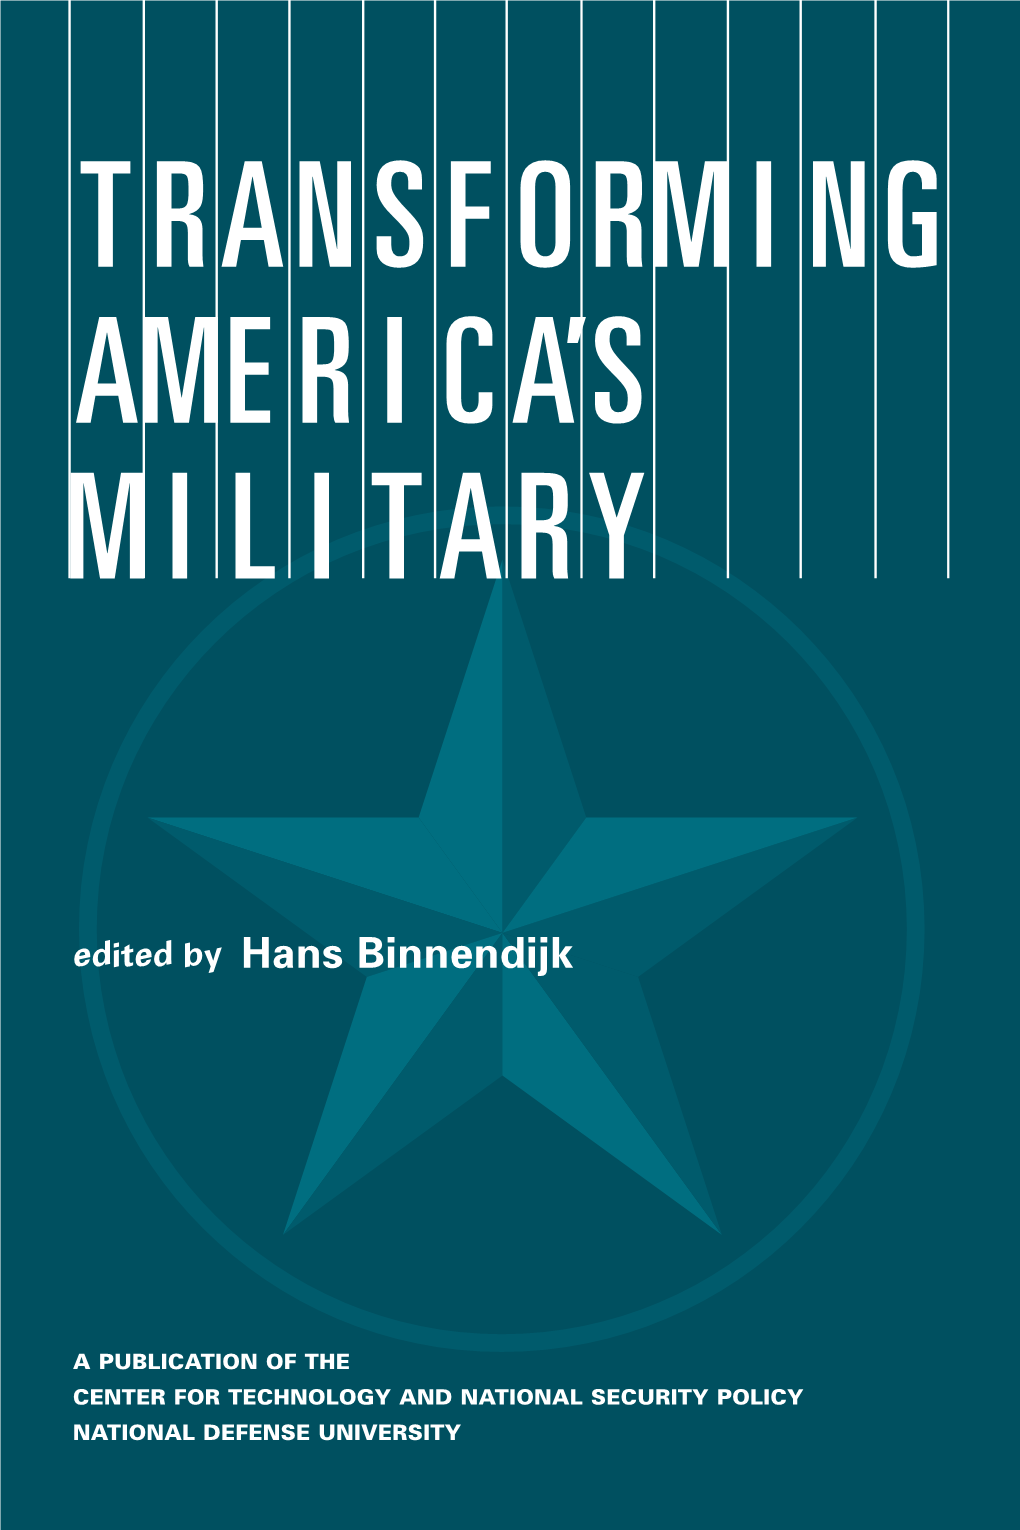 Transforming America's Military